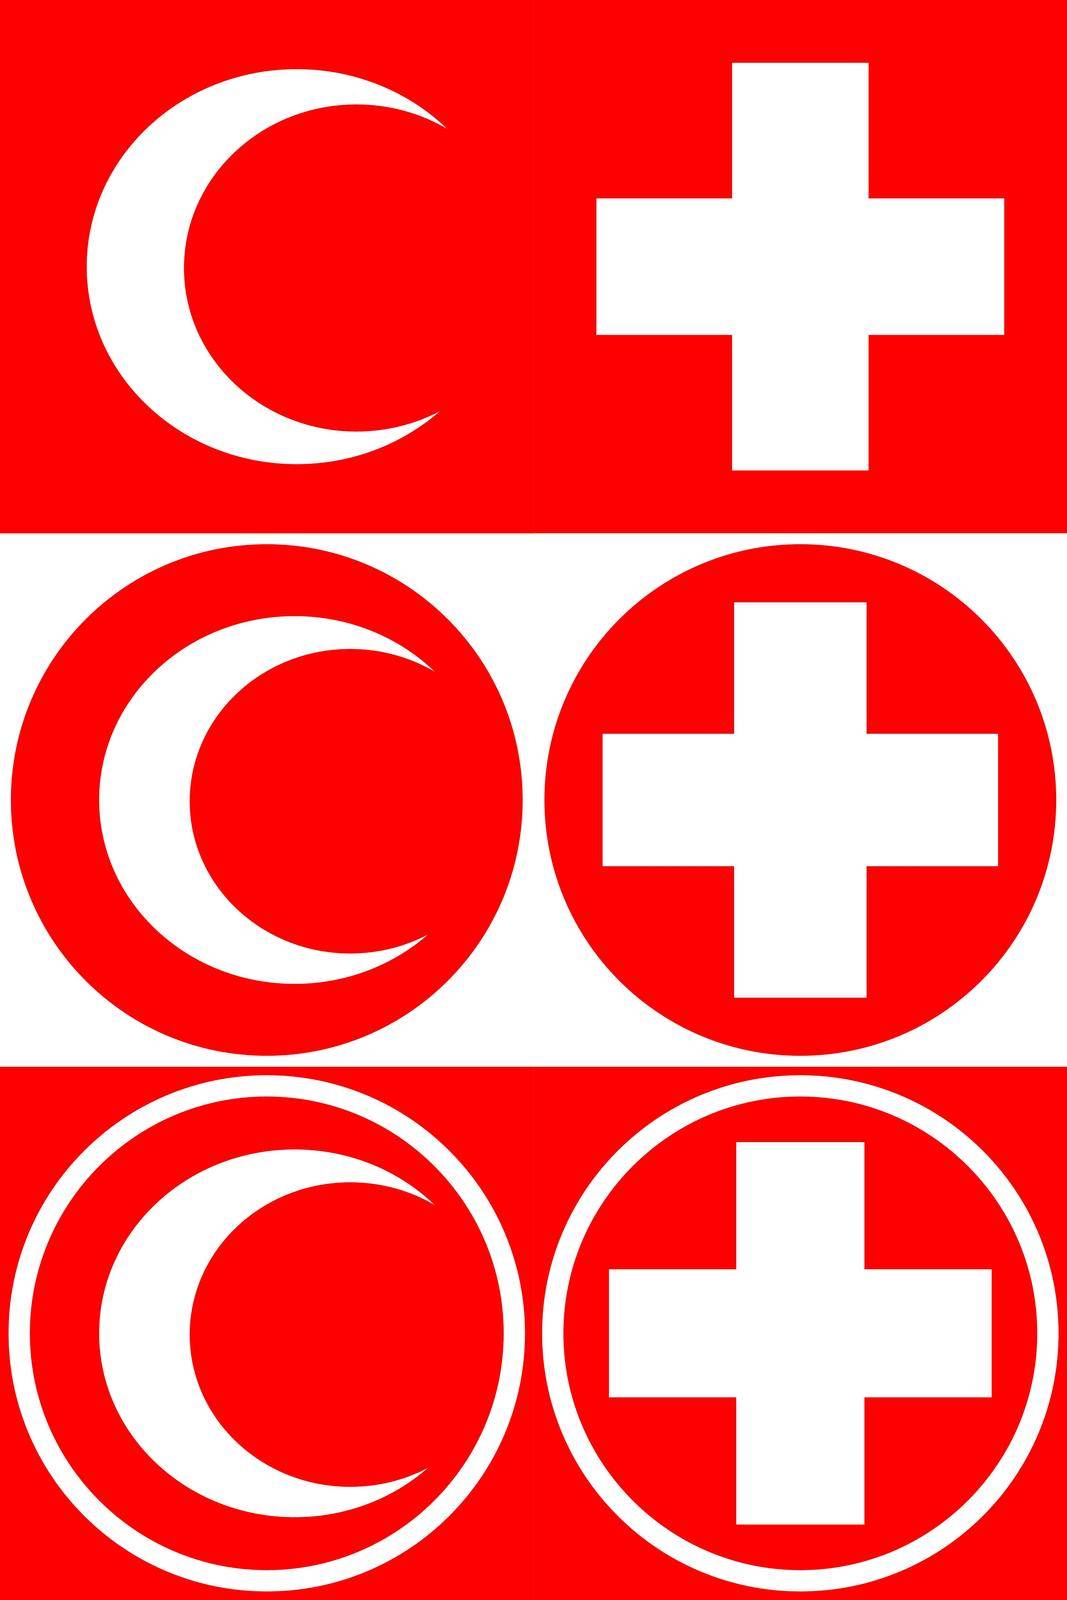 Medical cross and medical crescent. A set of options for medical symbols. Vector illustrations